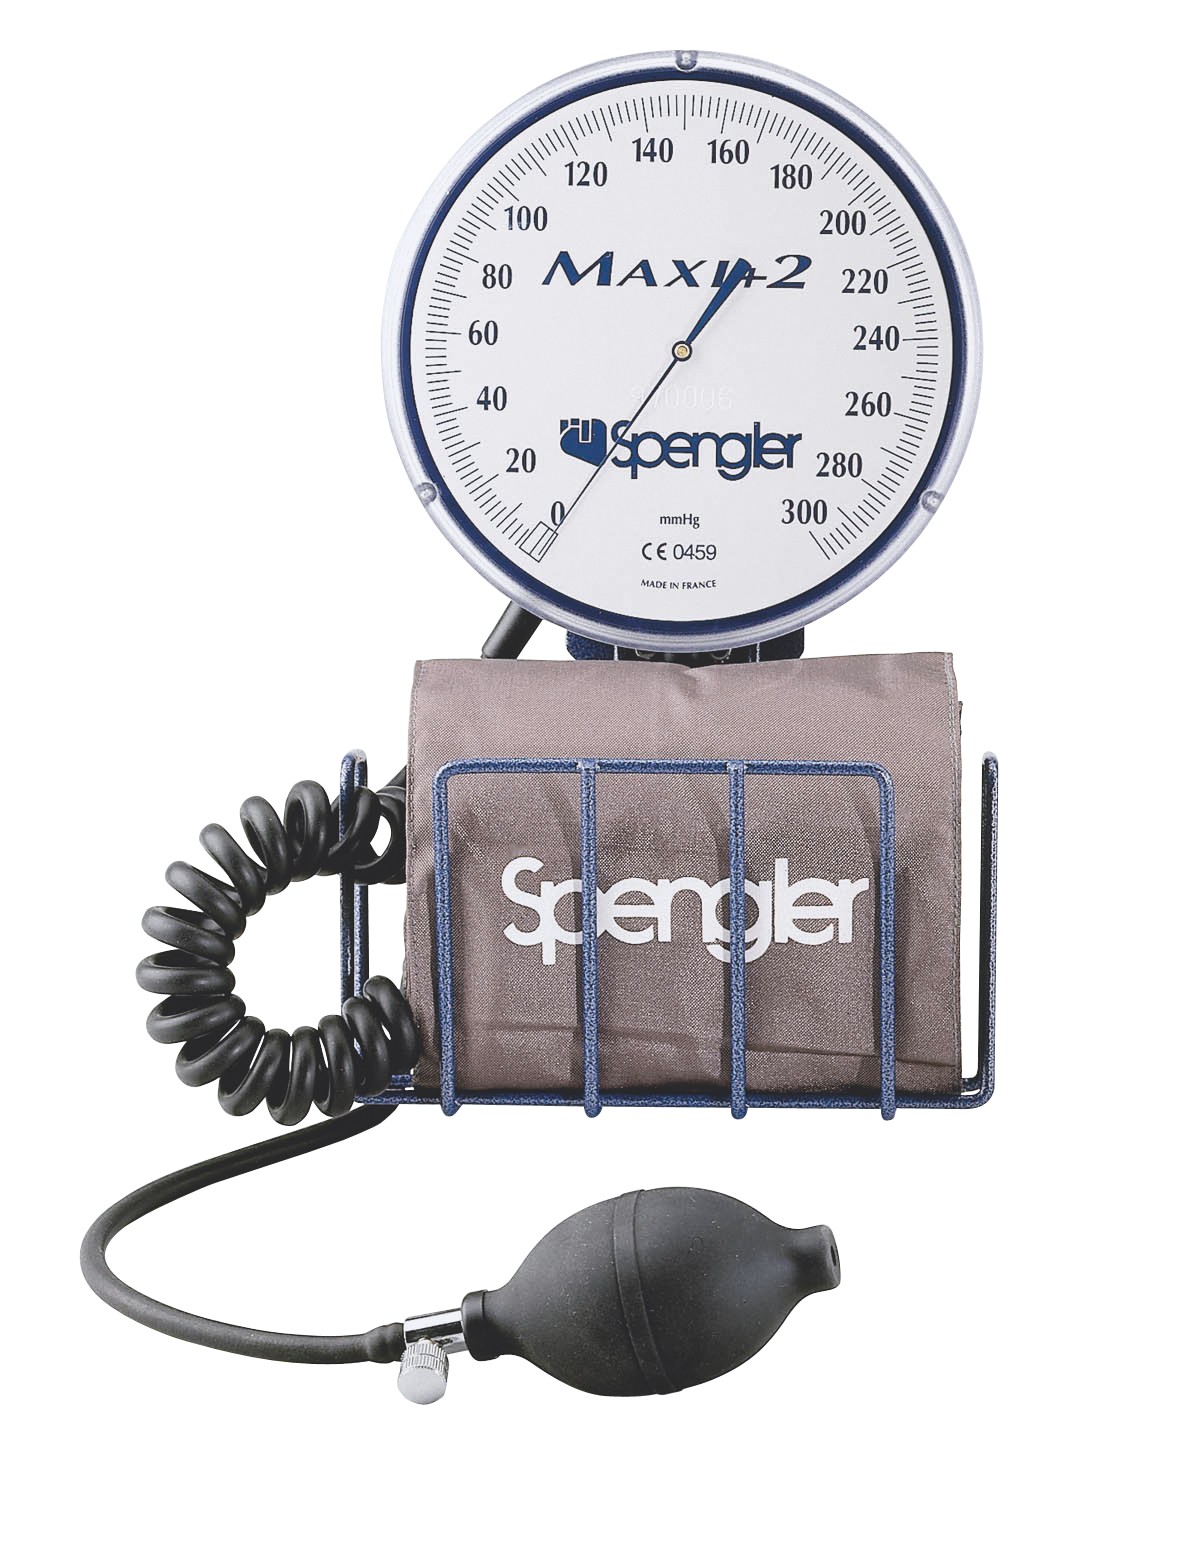 Tensiomètre Maxi +2 - Spengler - Disposys Médical